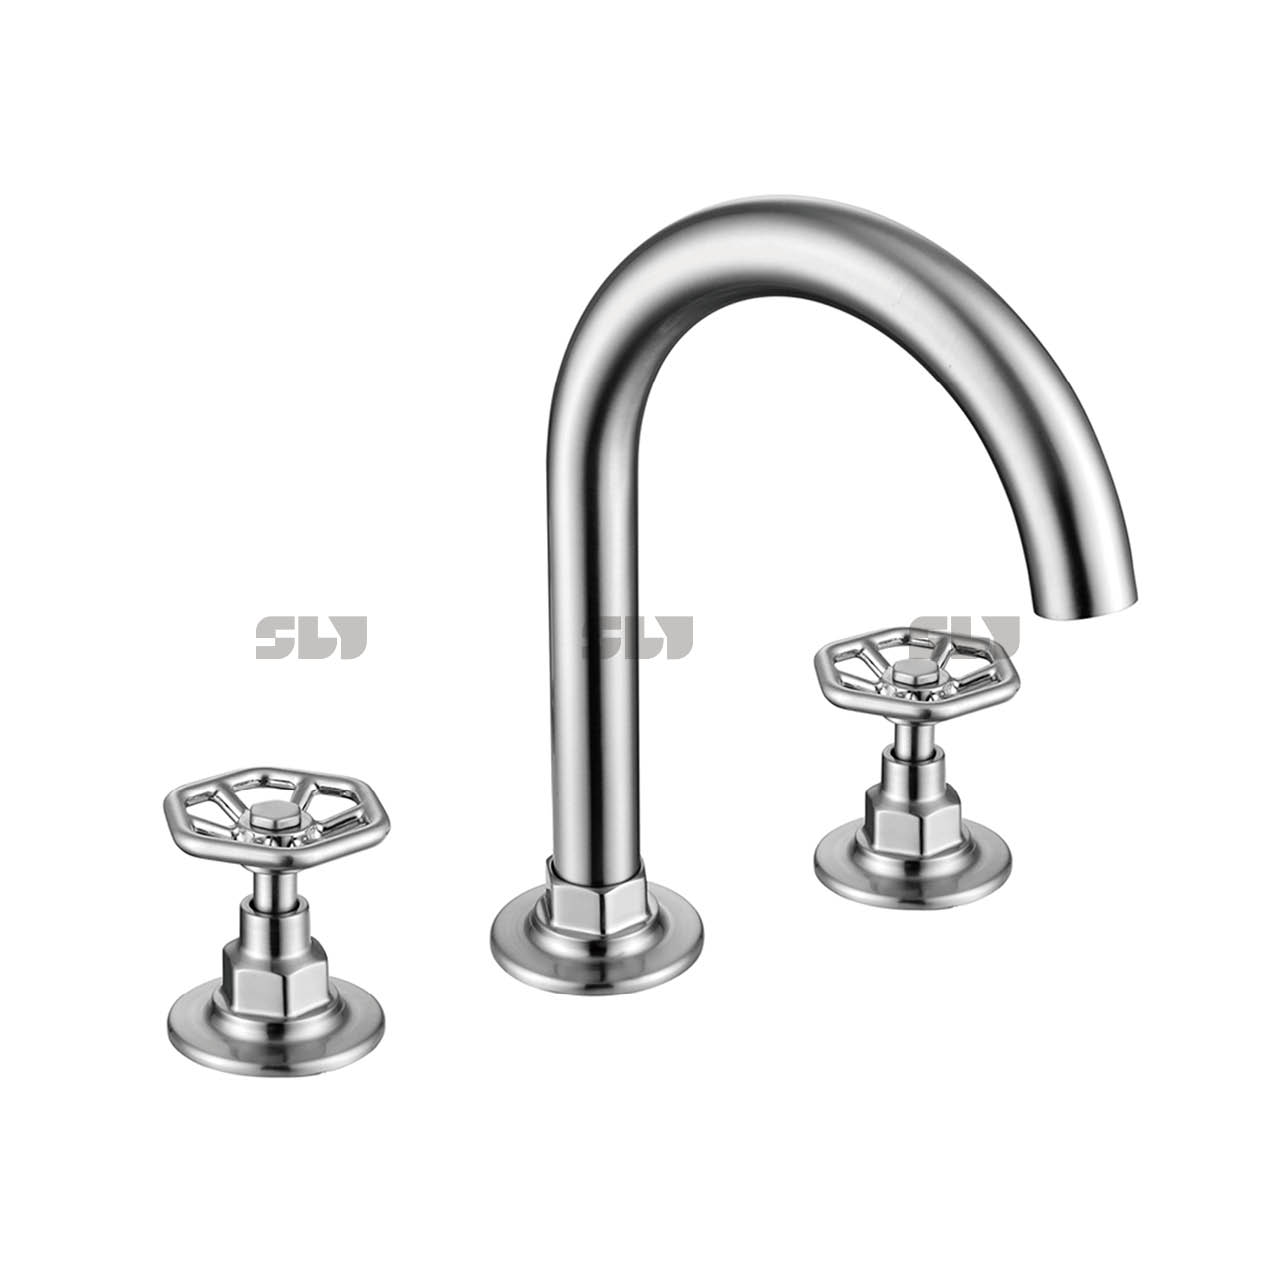 SLY Basin Mixer Faucet Basin Mixer Faucet Widespread Chrome Wash Basin Dual Handle Faucets 